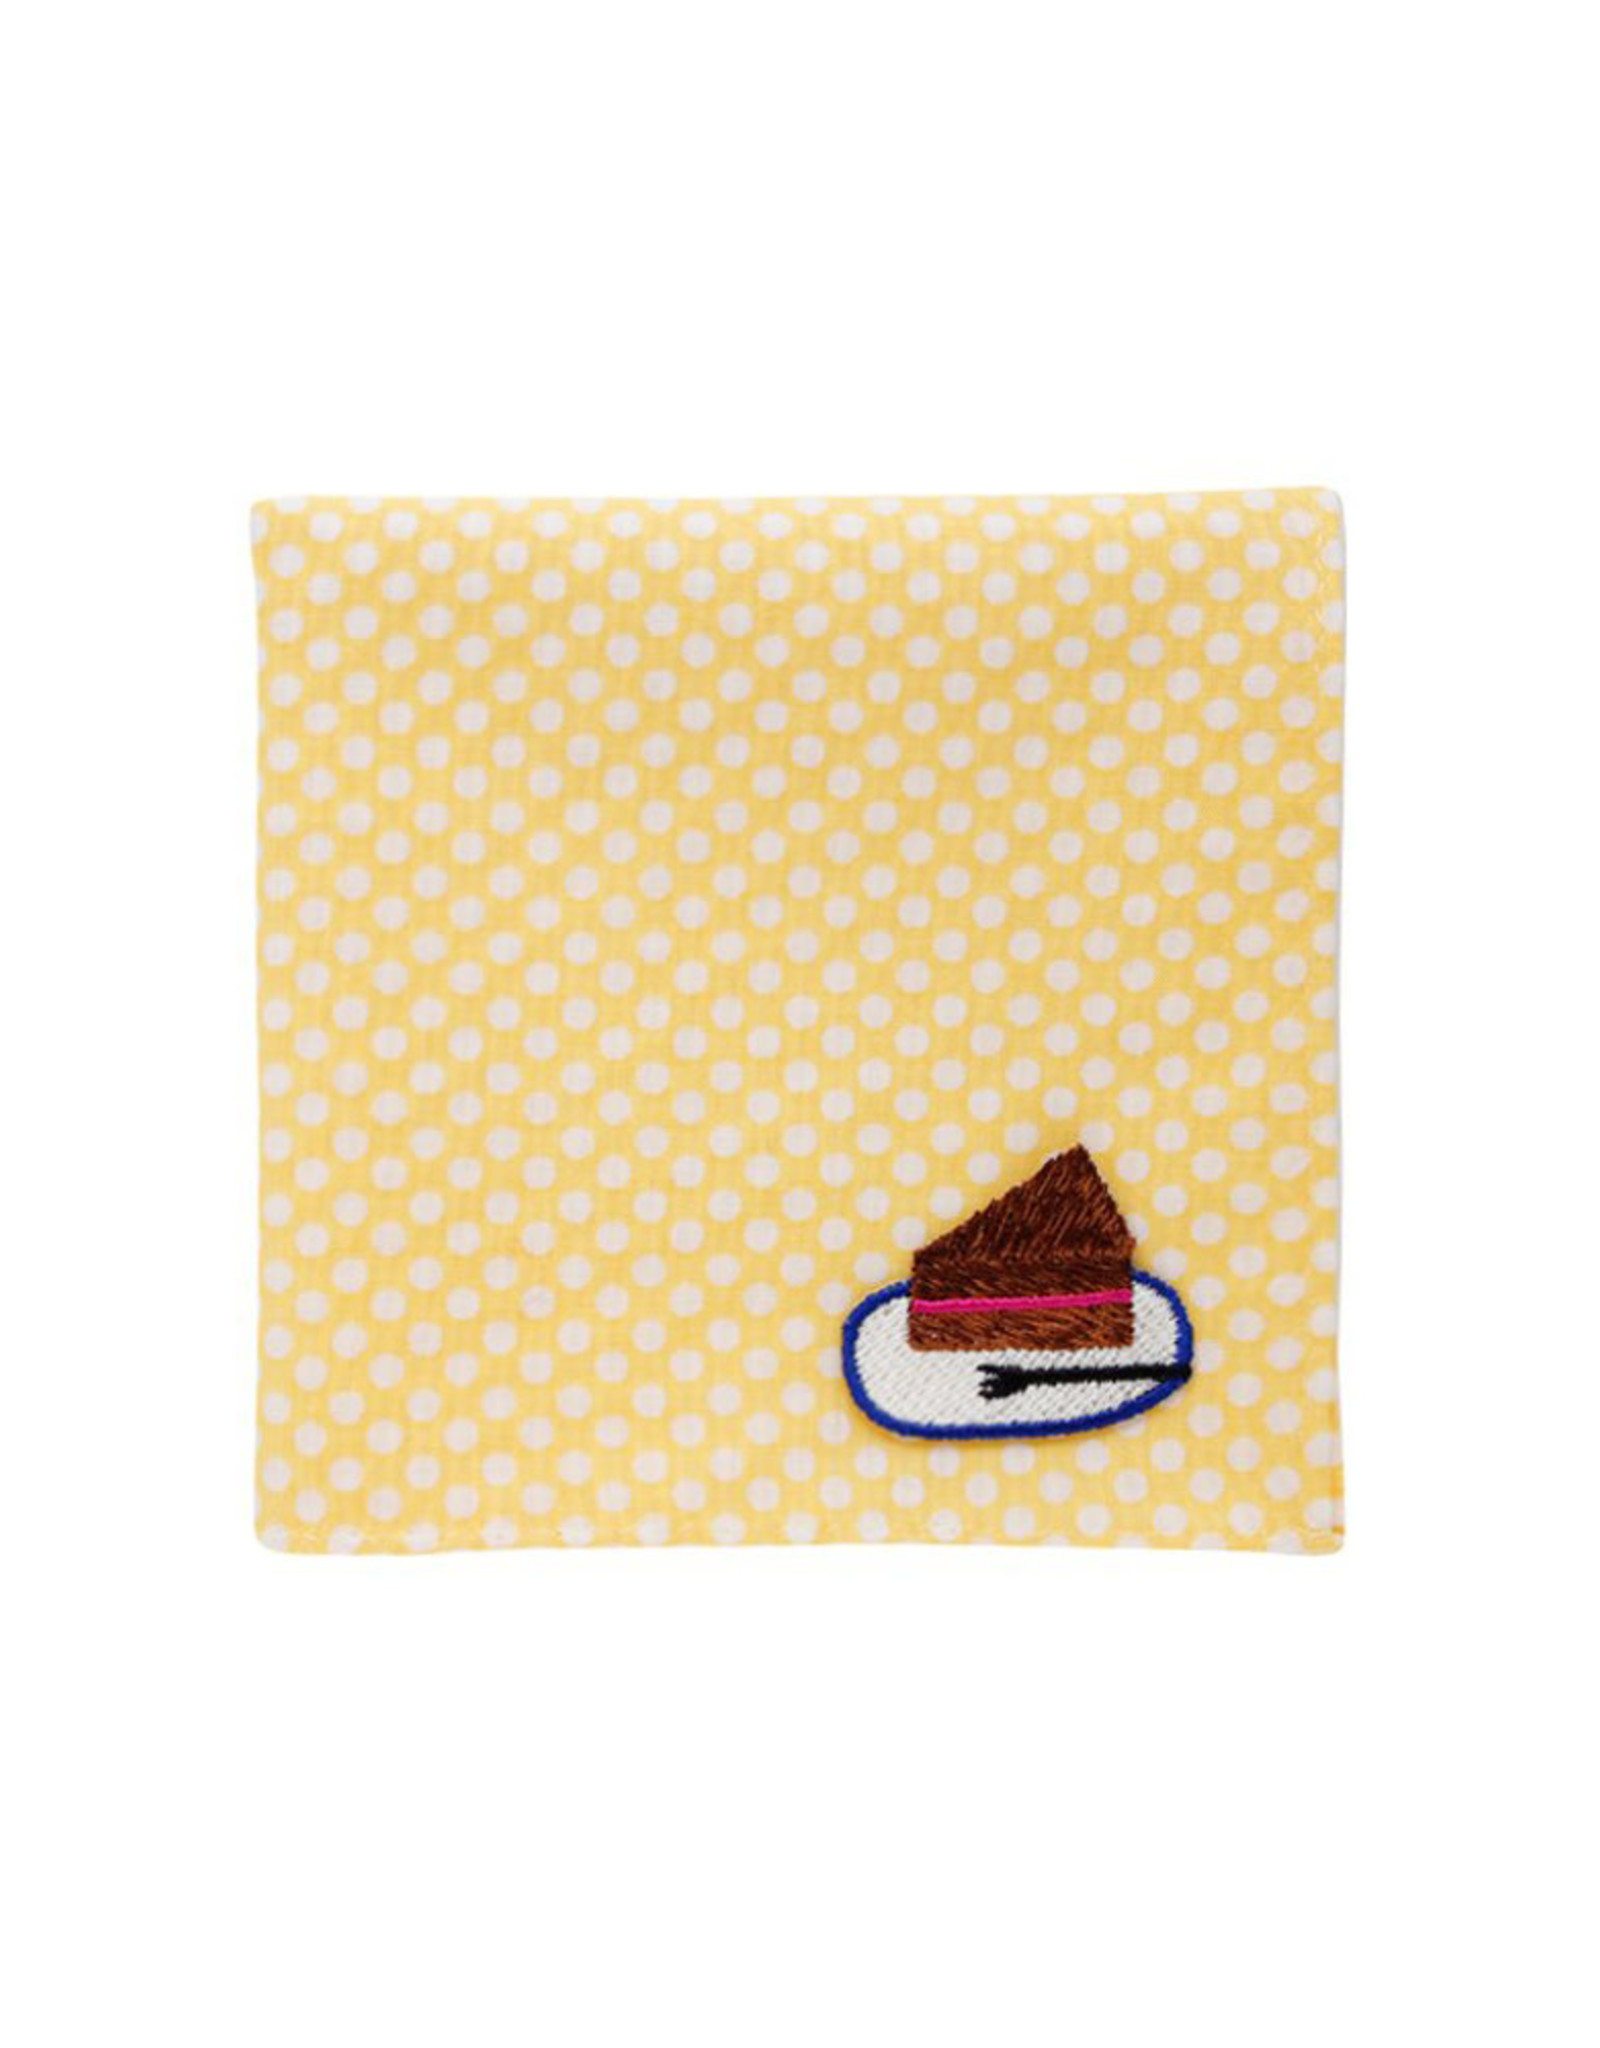 H Tokyo Handkerchiefs "Chocolate Cake" Embroidered Handkerchief